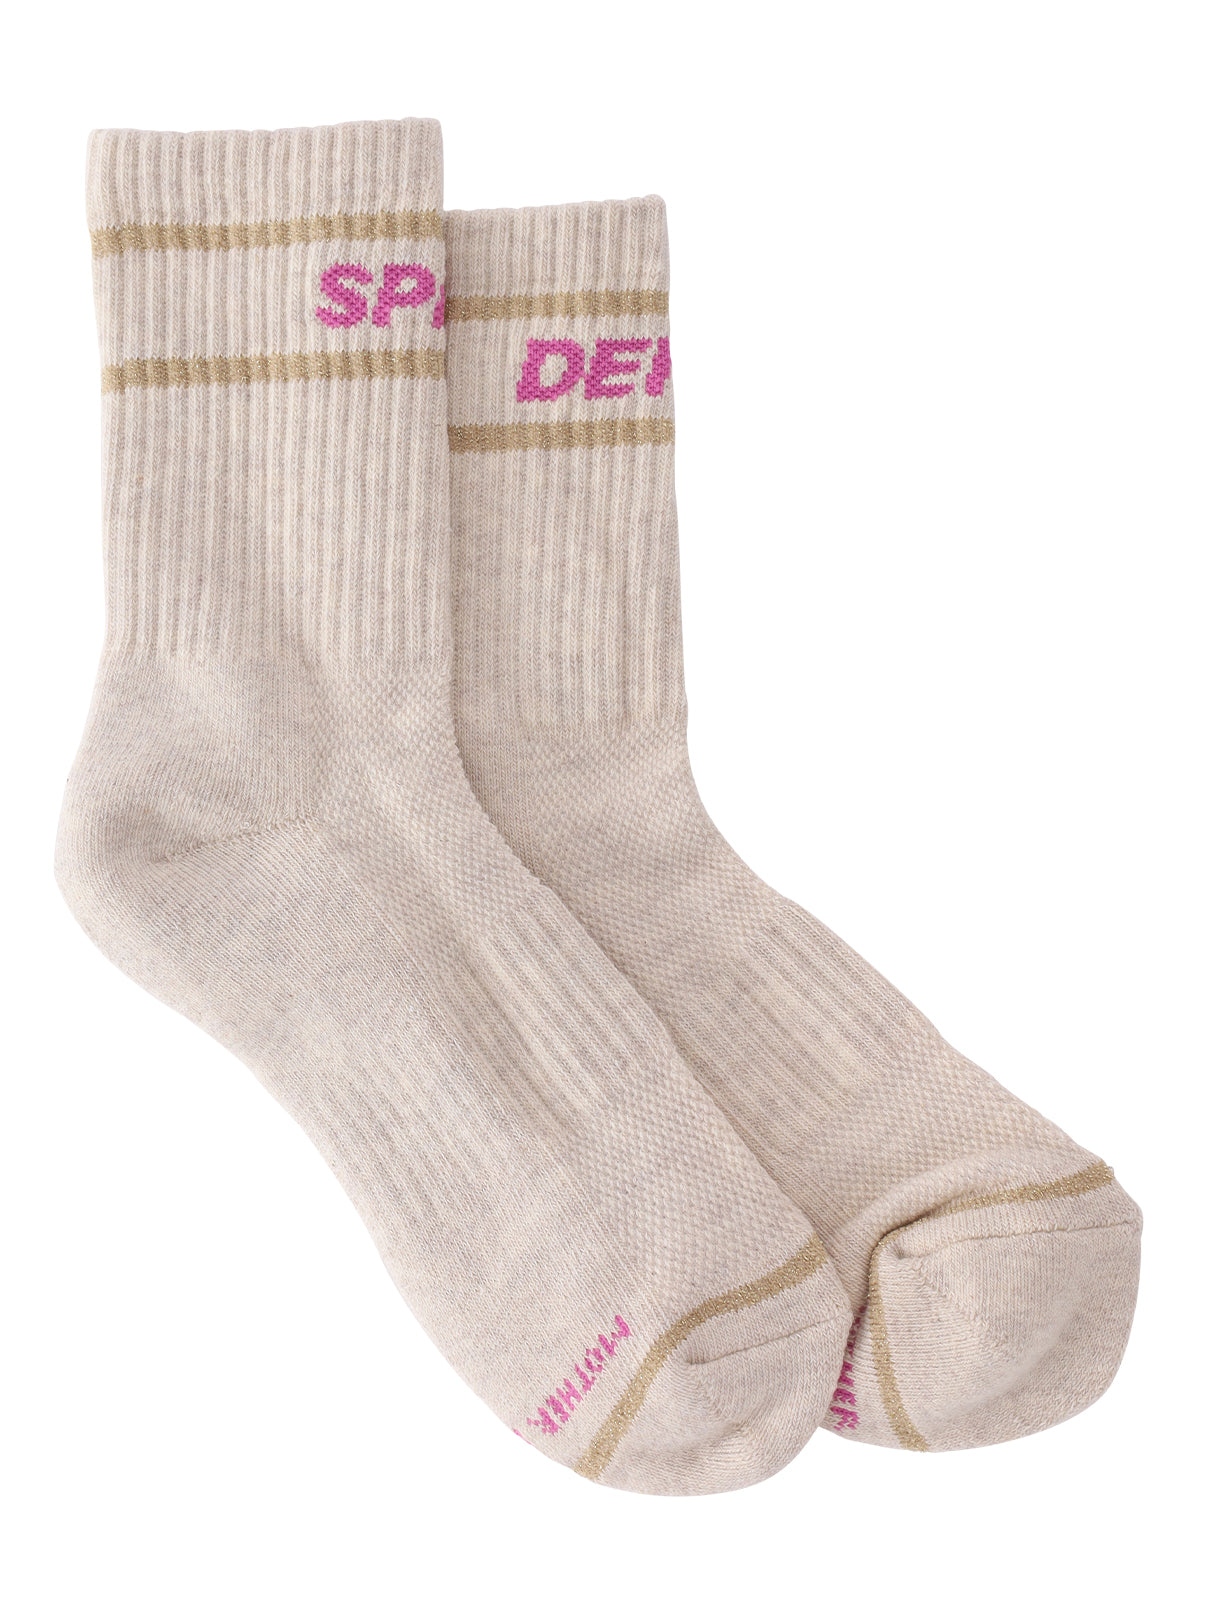 Baby Steps Socks - Spe